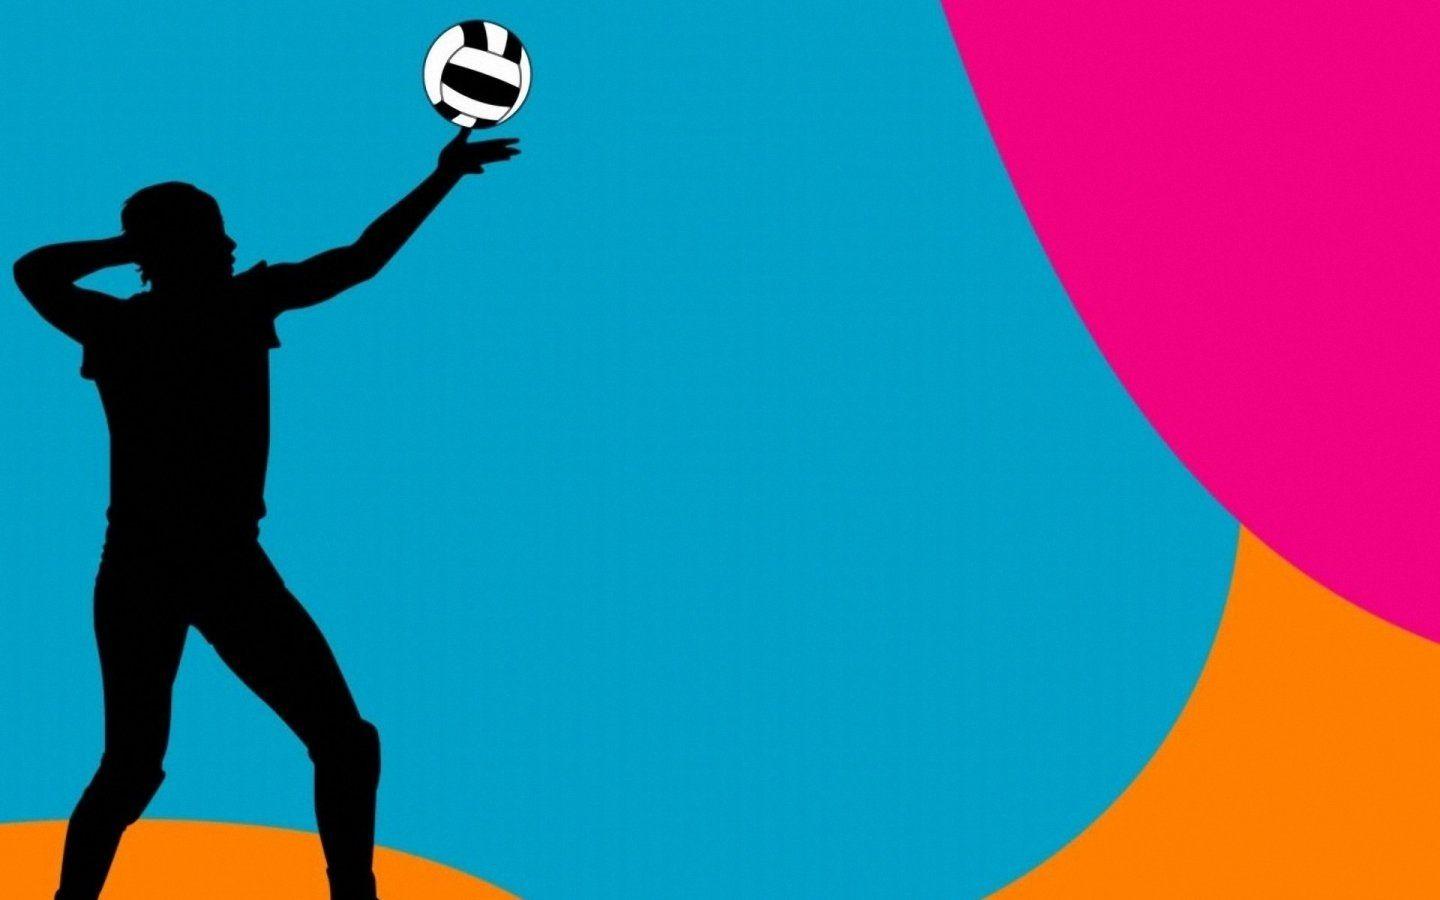 Volleyball Wallpaper